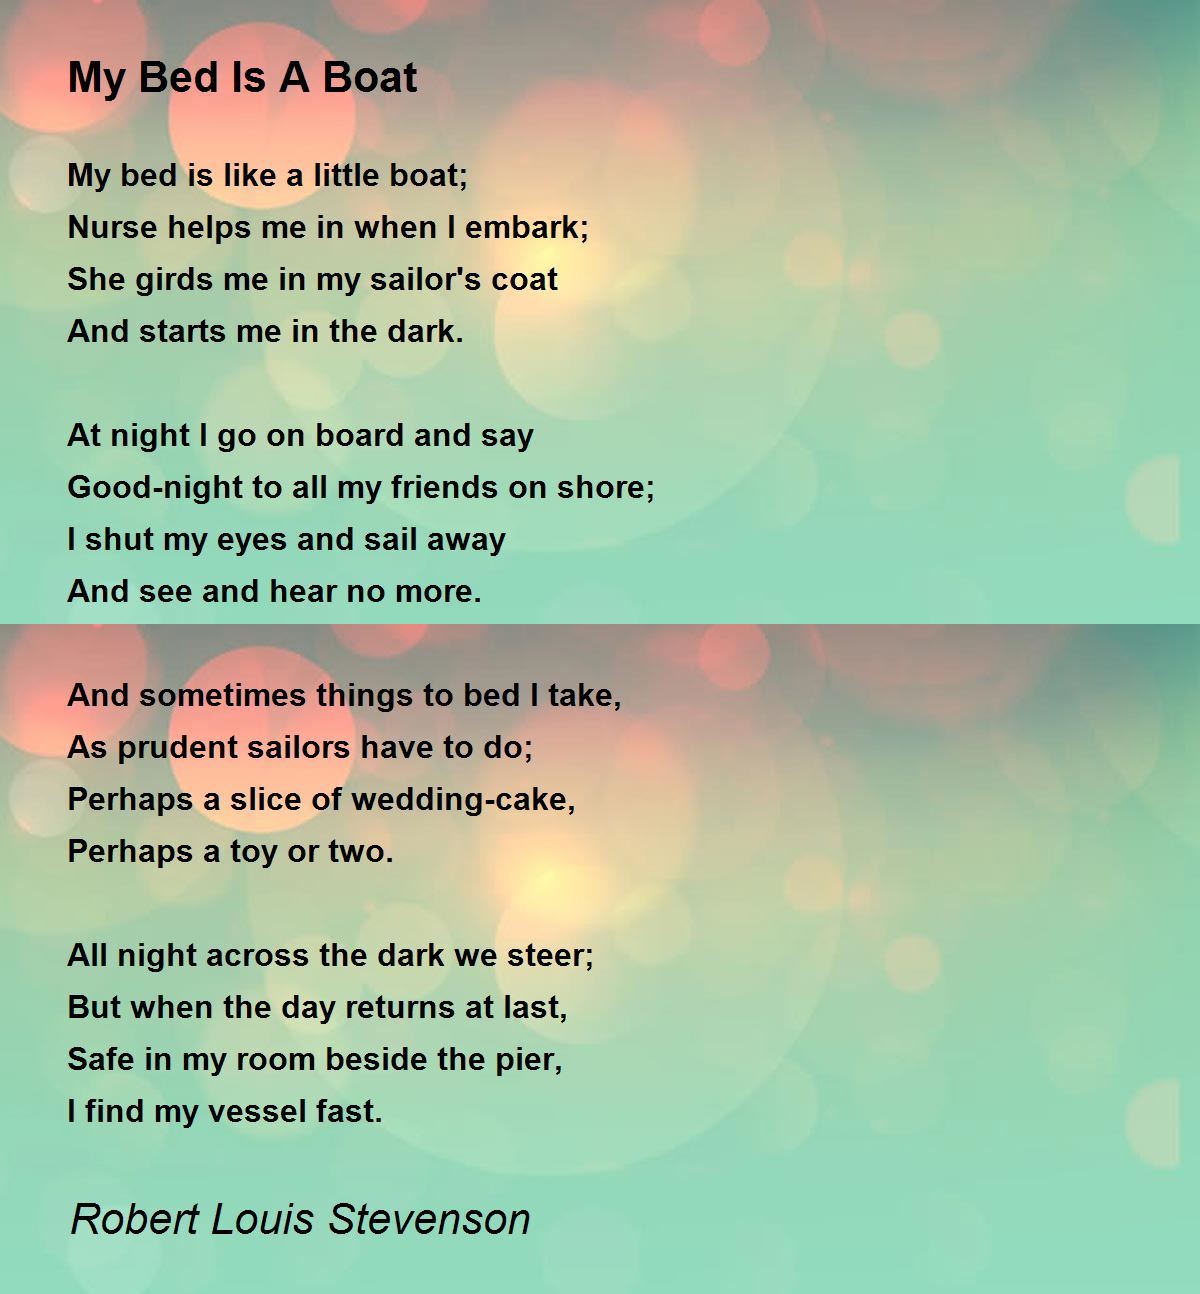 My Bed Is A Boat Poem by Robert Louis Stevenson - Poem Hunter